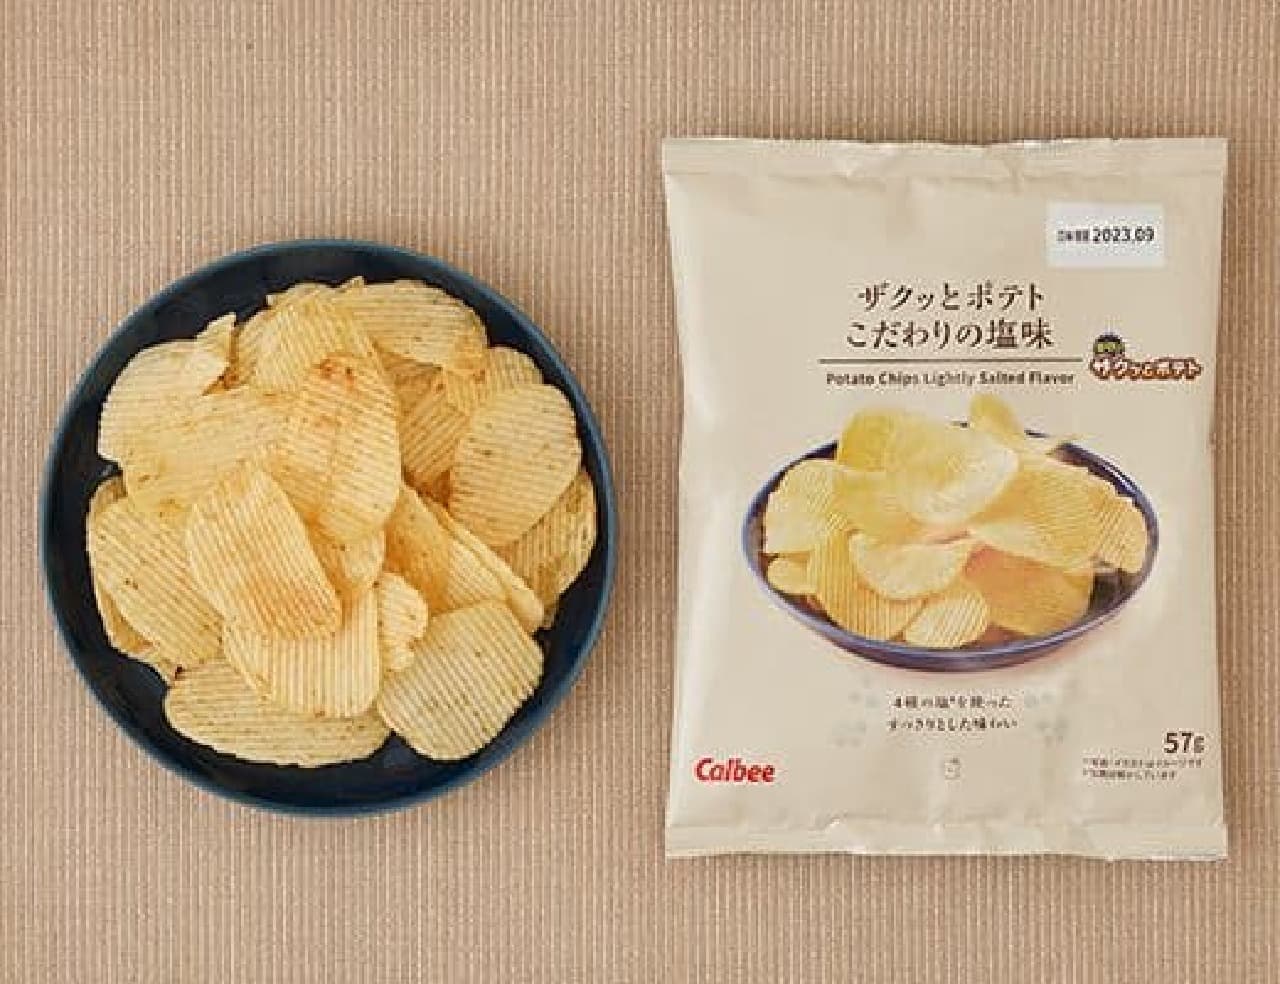 LAWSON "Zakutto Potato Kodawari no Salt Flavor 57g